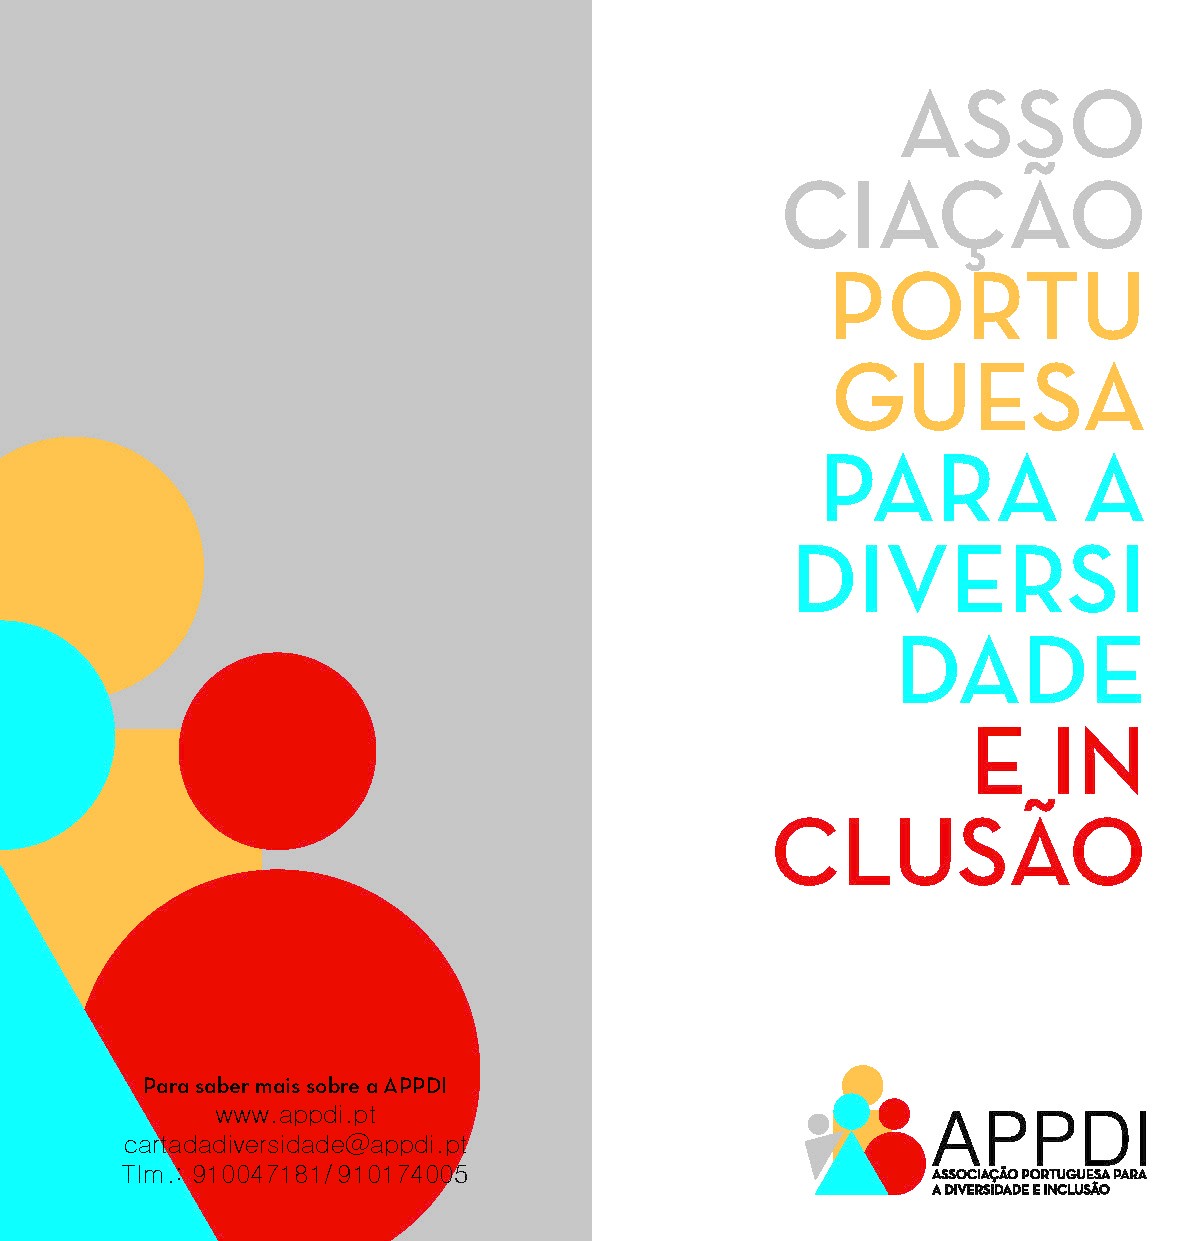 Gaiurb subscreve Carta Portuguesa da Diversidade